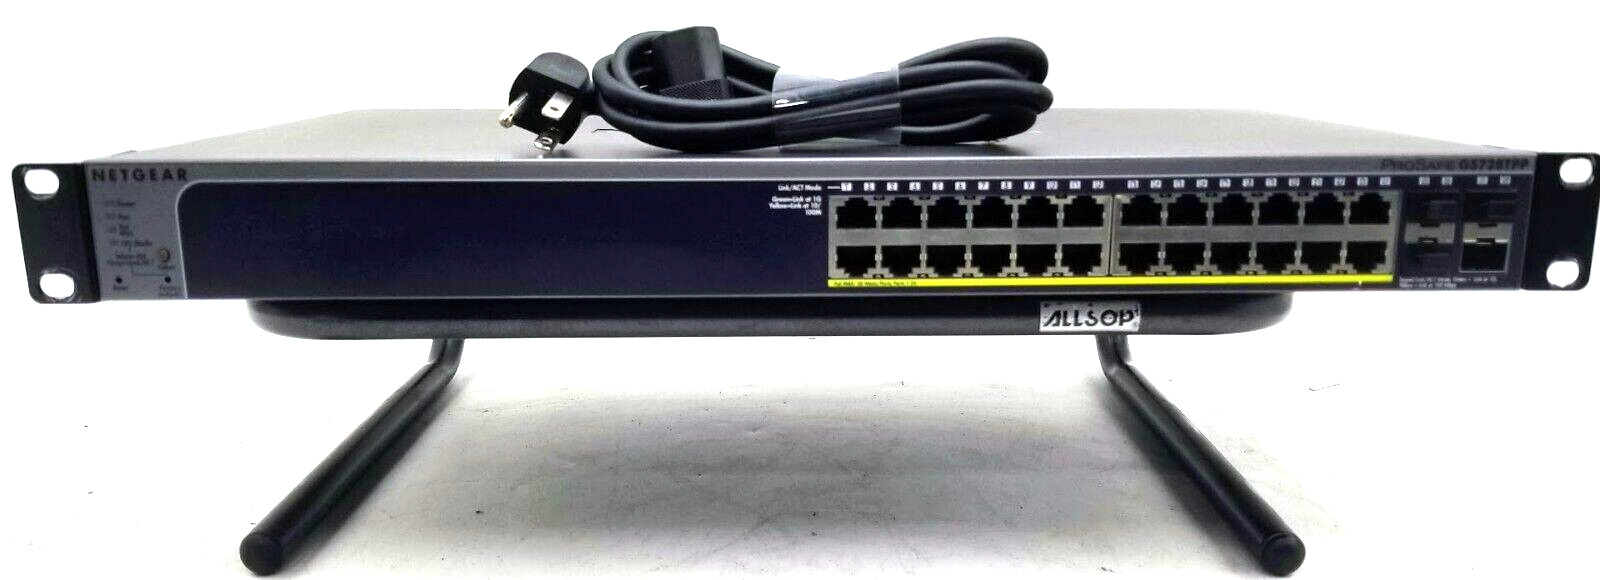 Netgear Prosafe GS728TPP 24 Port PoE+ Gigabit Network Switch